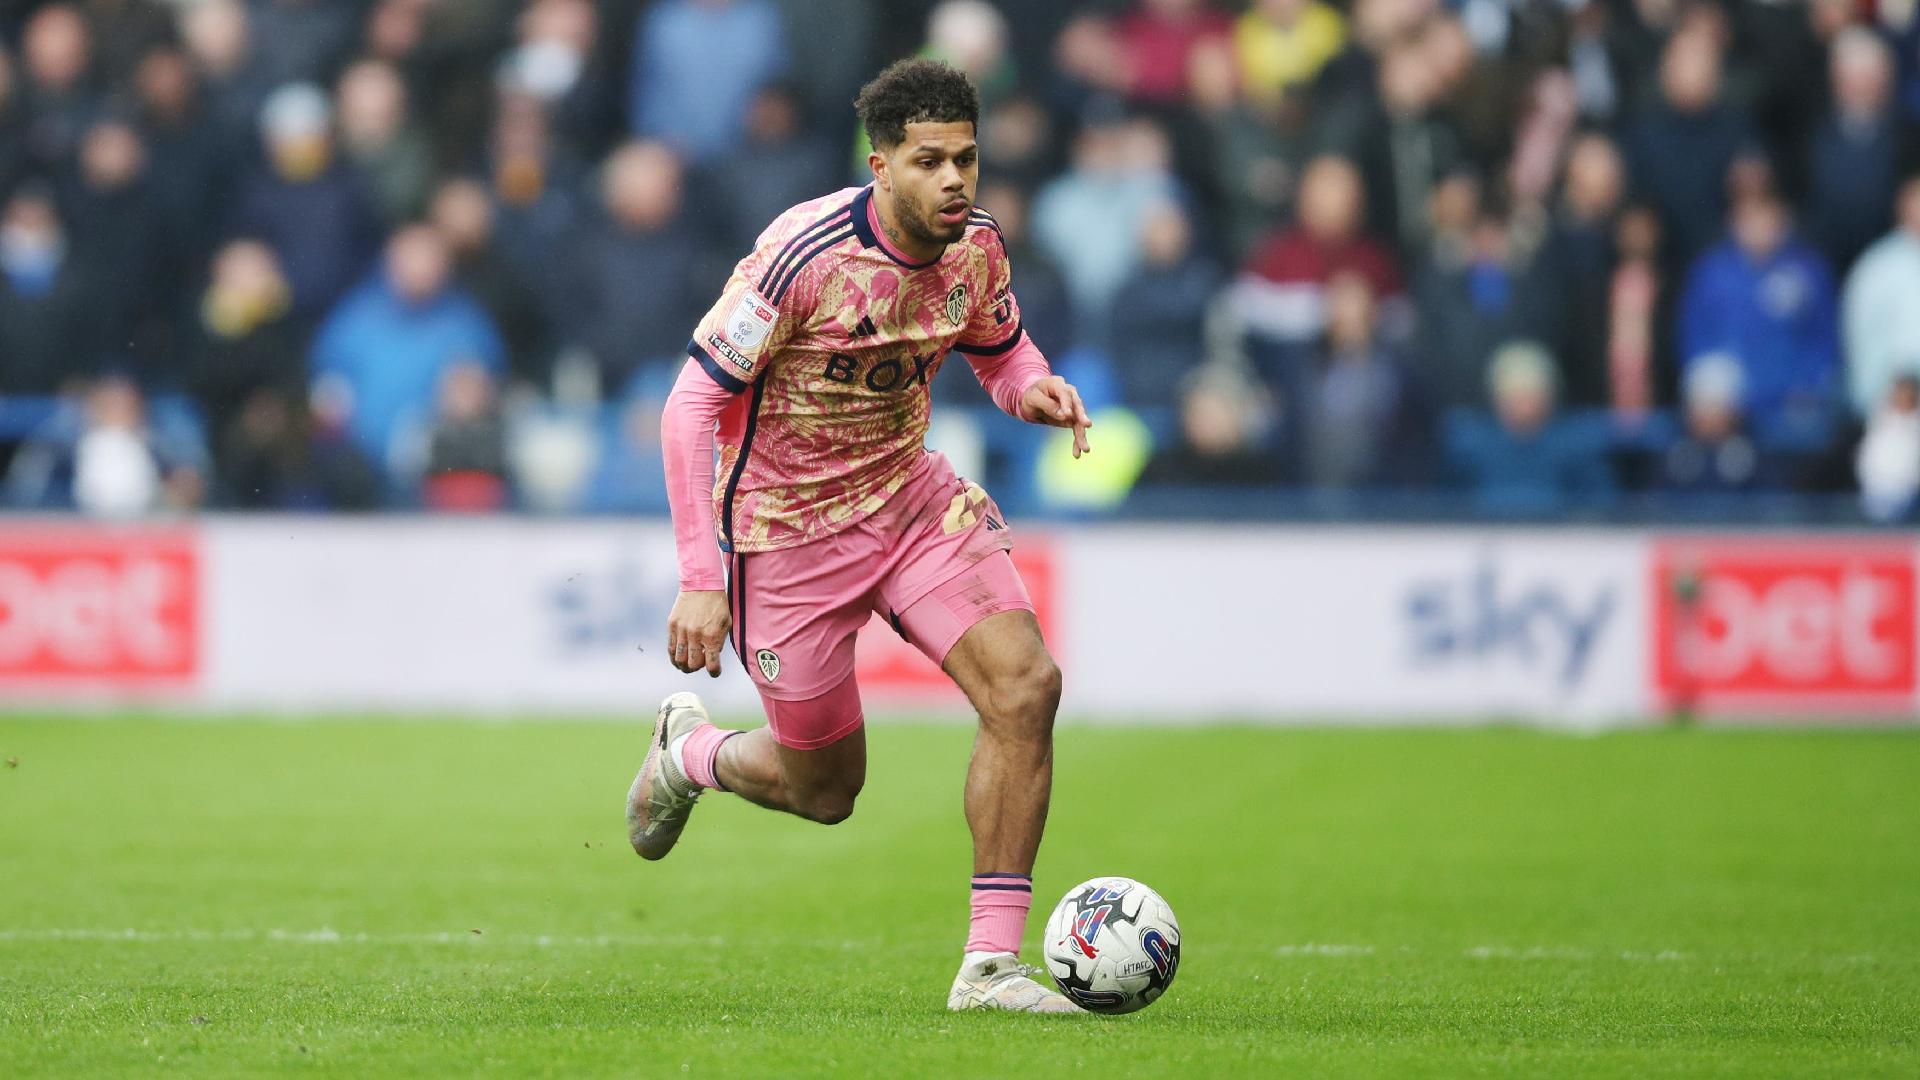 Leeds’ winning run halted with draw at Huddersfield